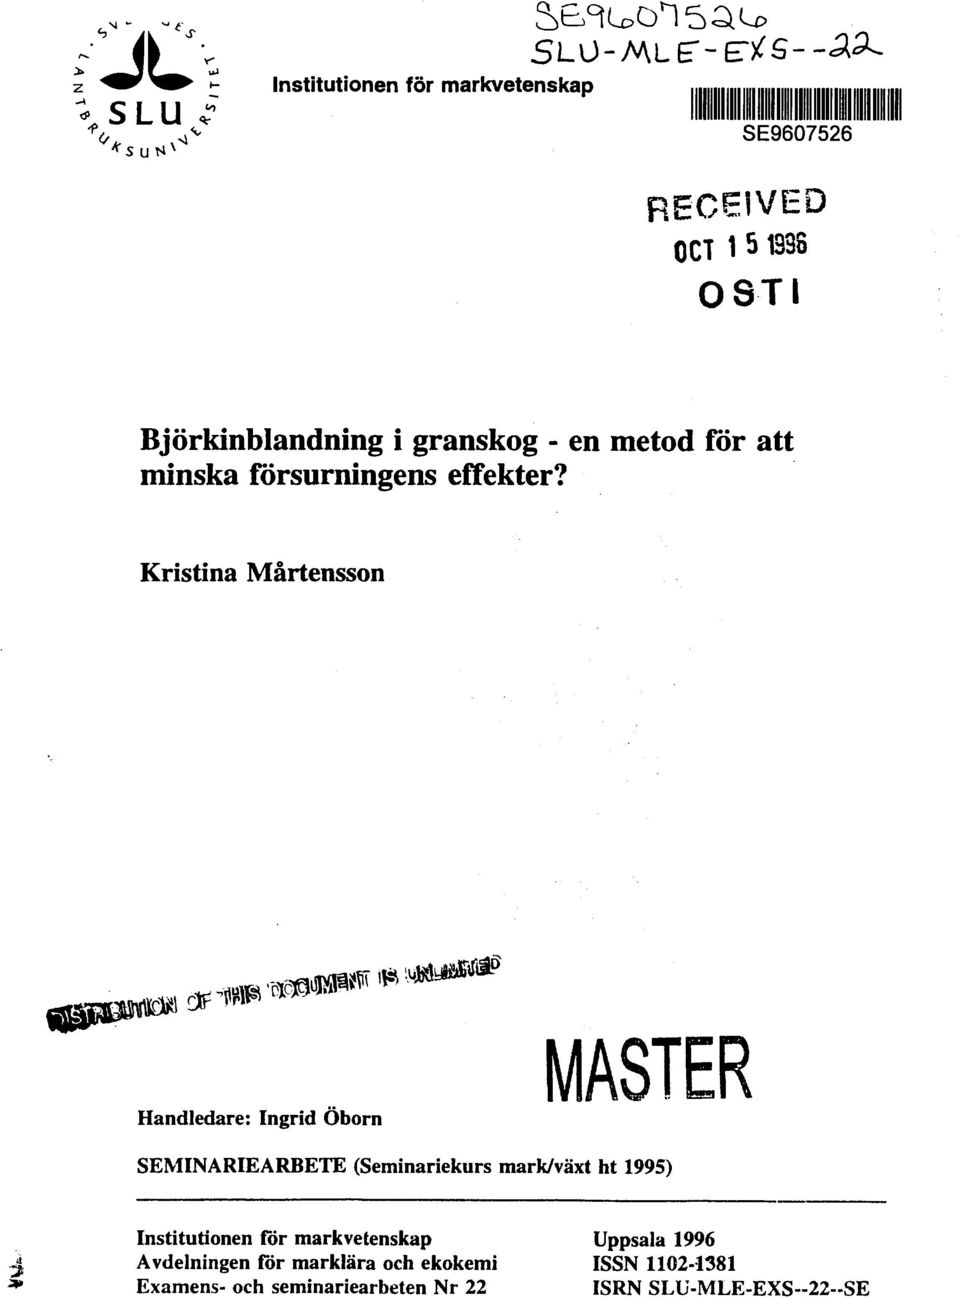 Kristina Mårtensson Handledare: Ingrid Öborn MASTI SEMINARIEARBETE (Seminariekurs mark/växt ht 1995)